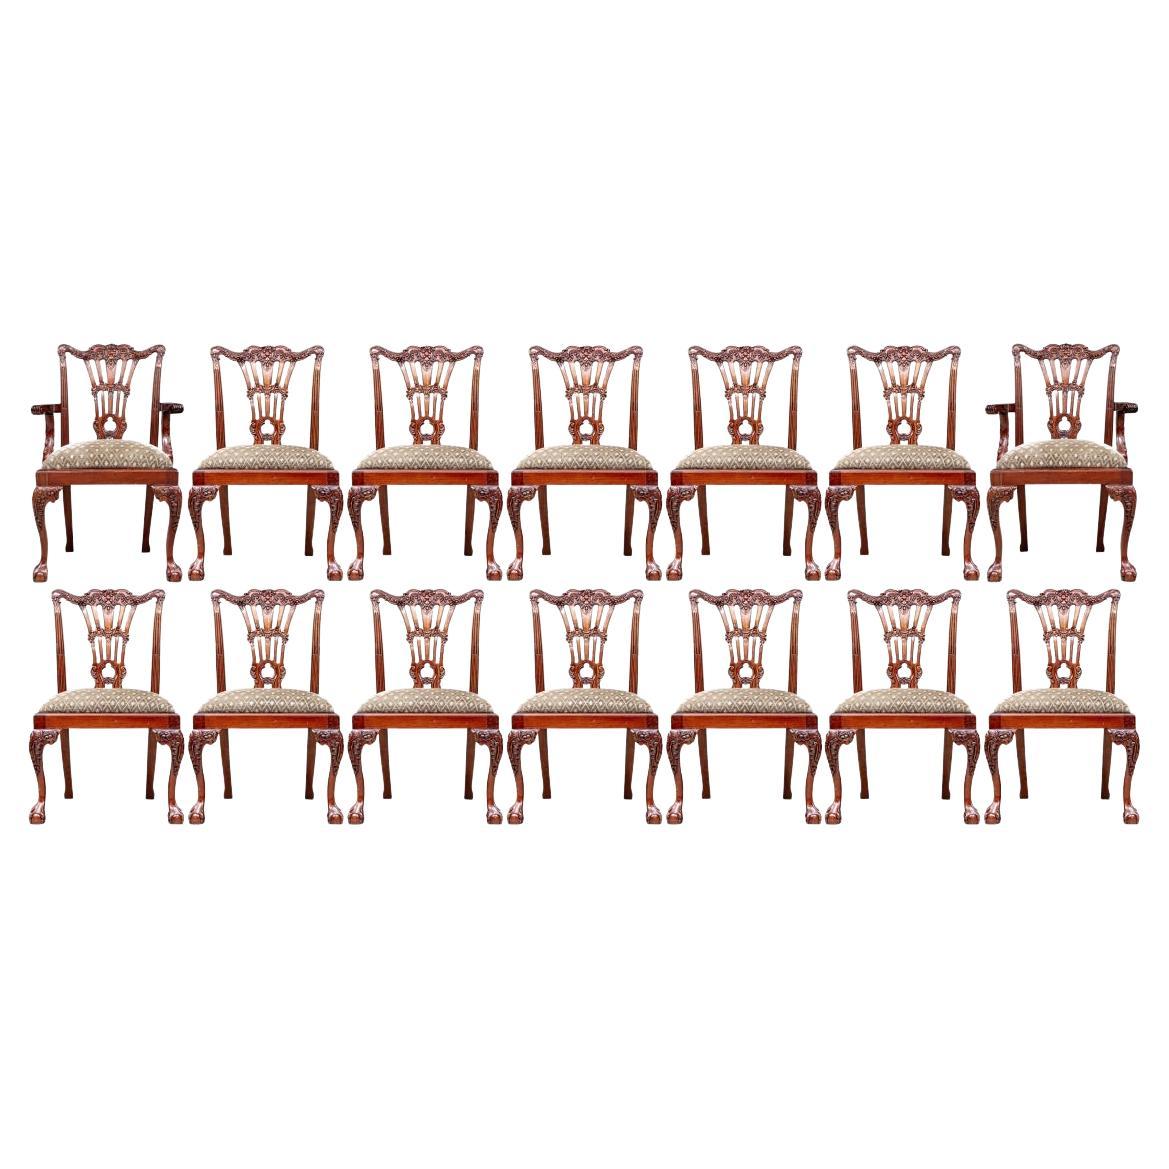 Raffinato set di 14 sedie da pranzo intagliate in stile georgiano